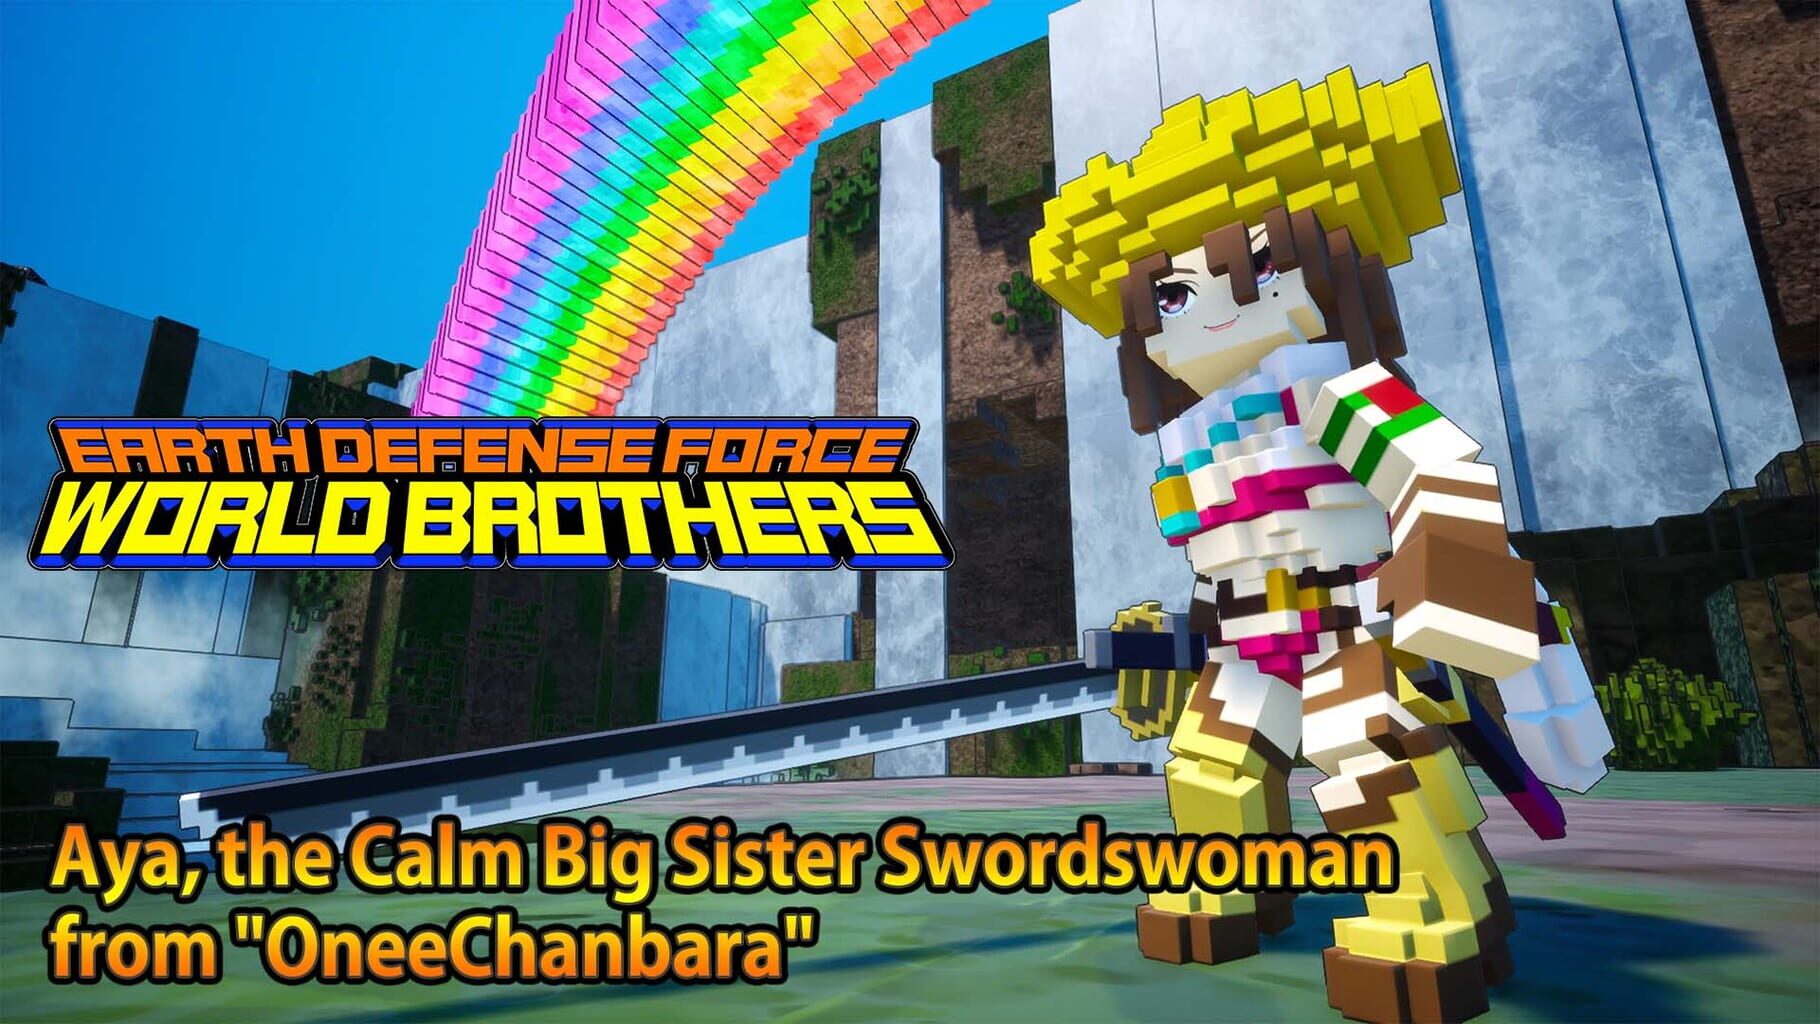 Earth Defense Force: World Brothers - Aya, the Calm Big Sister Swordswoman from "OneeChanbara" artwork